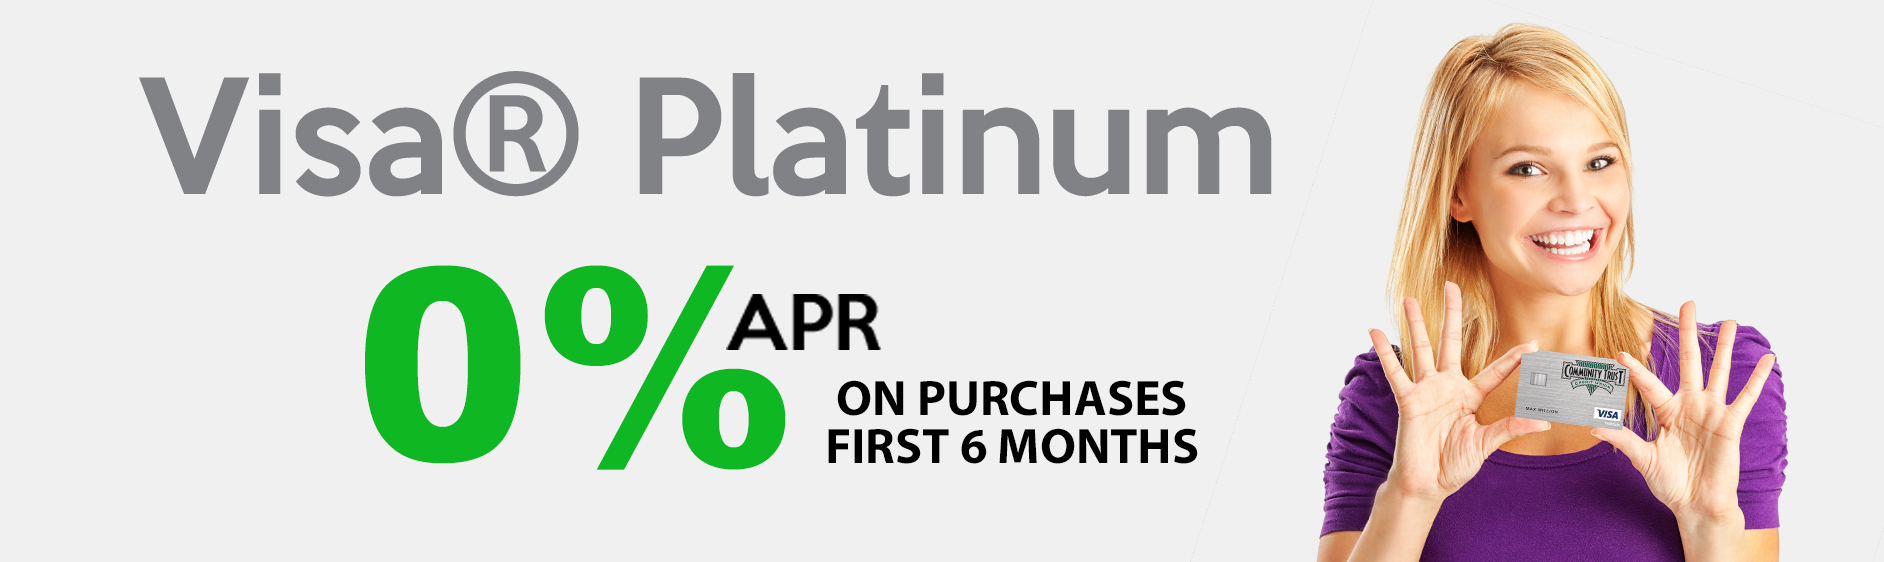 Visa Platinum No Balance Transfer Fee 1.9% APR first 12 months